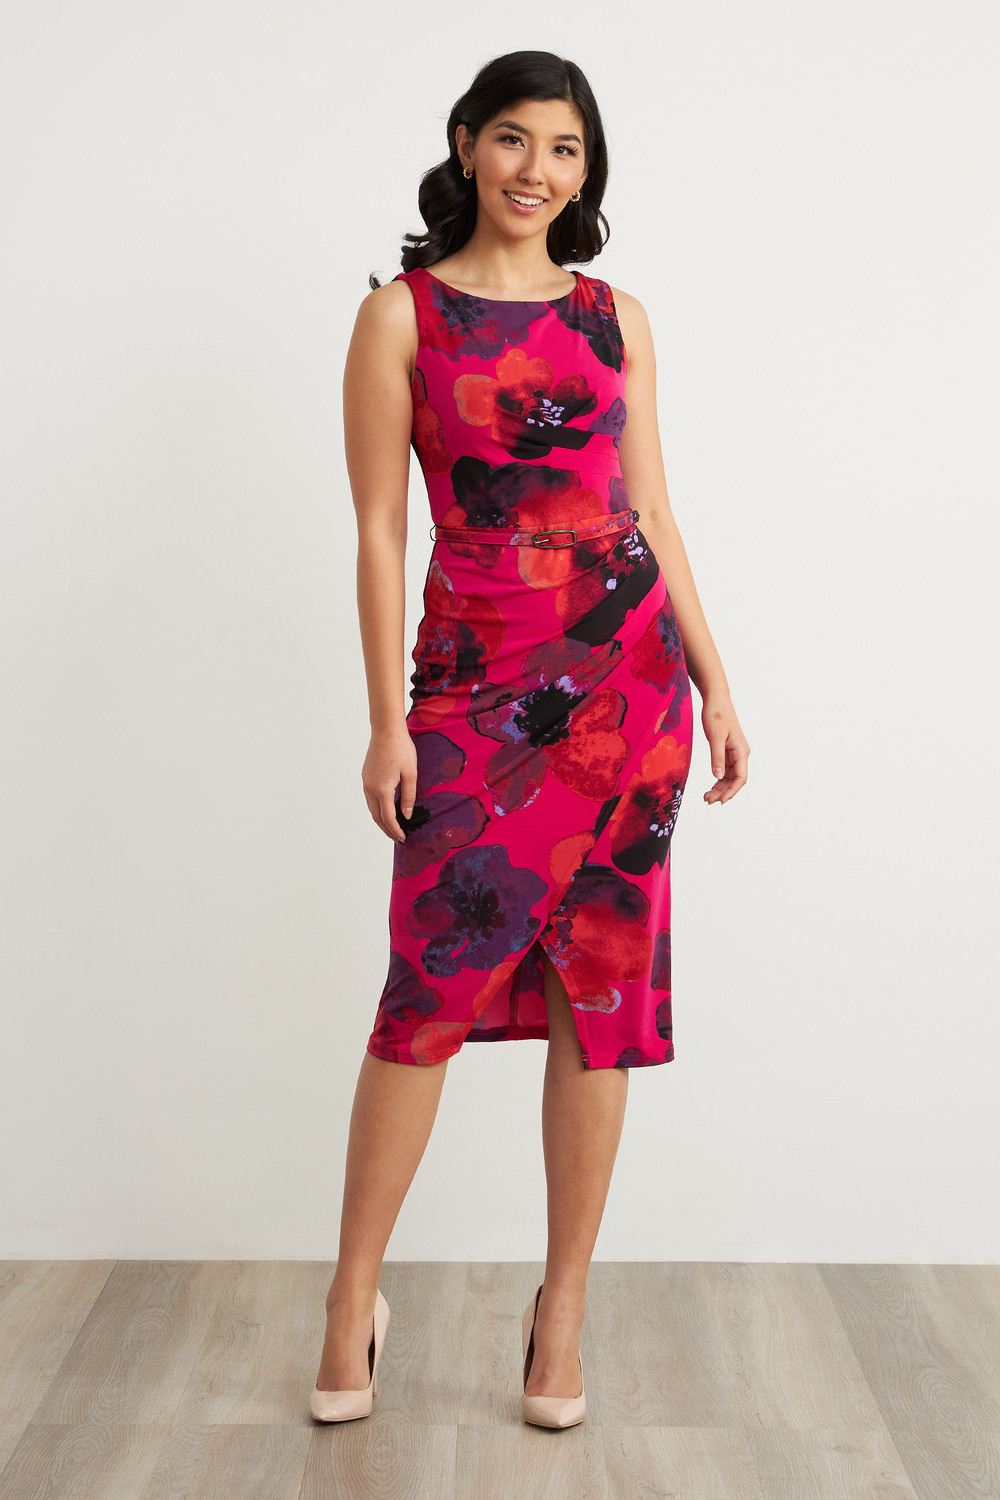 Joseph Ribkoff Floral Sheath Dress Style 211351. Pink/multi